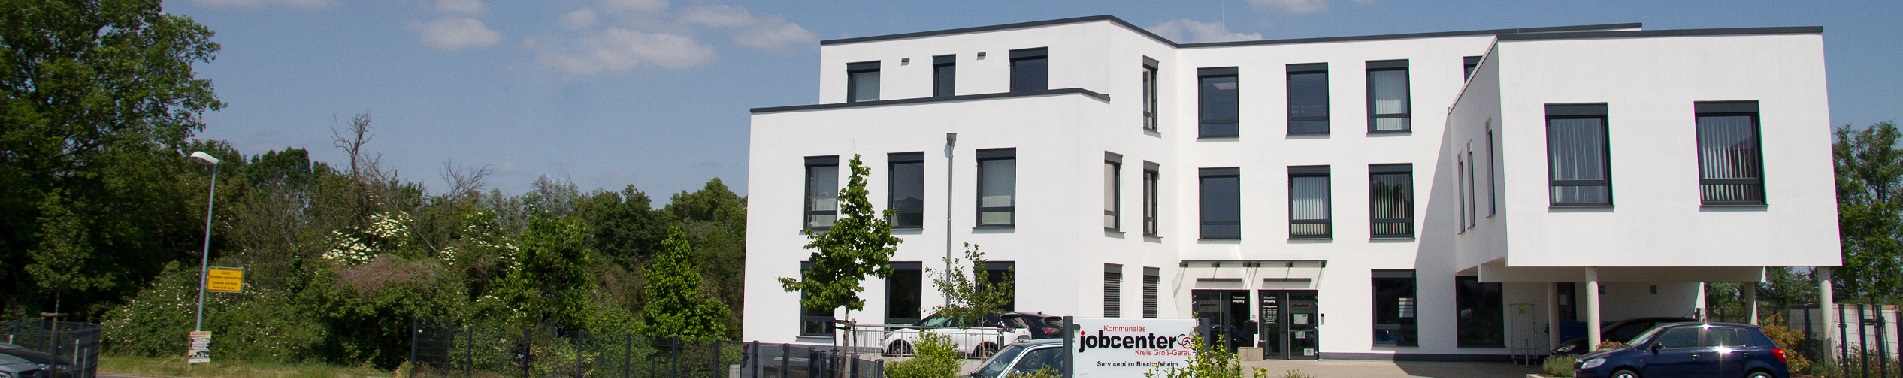 Exterior view of the Jobcenter building in Bischofsheim